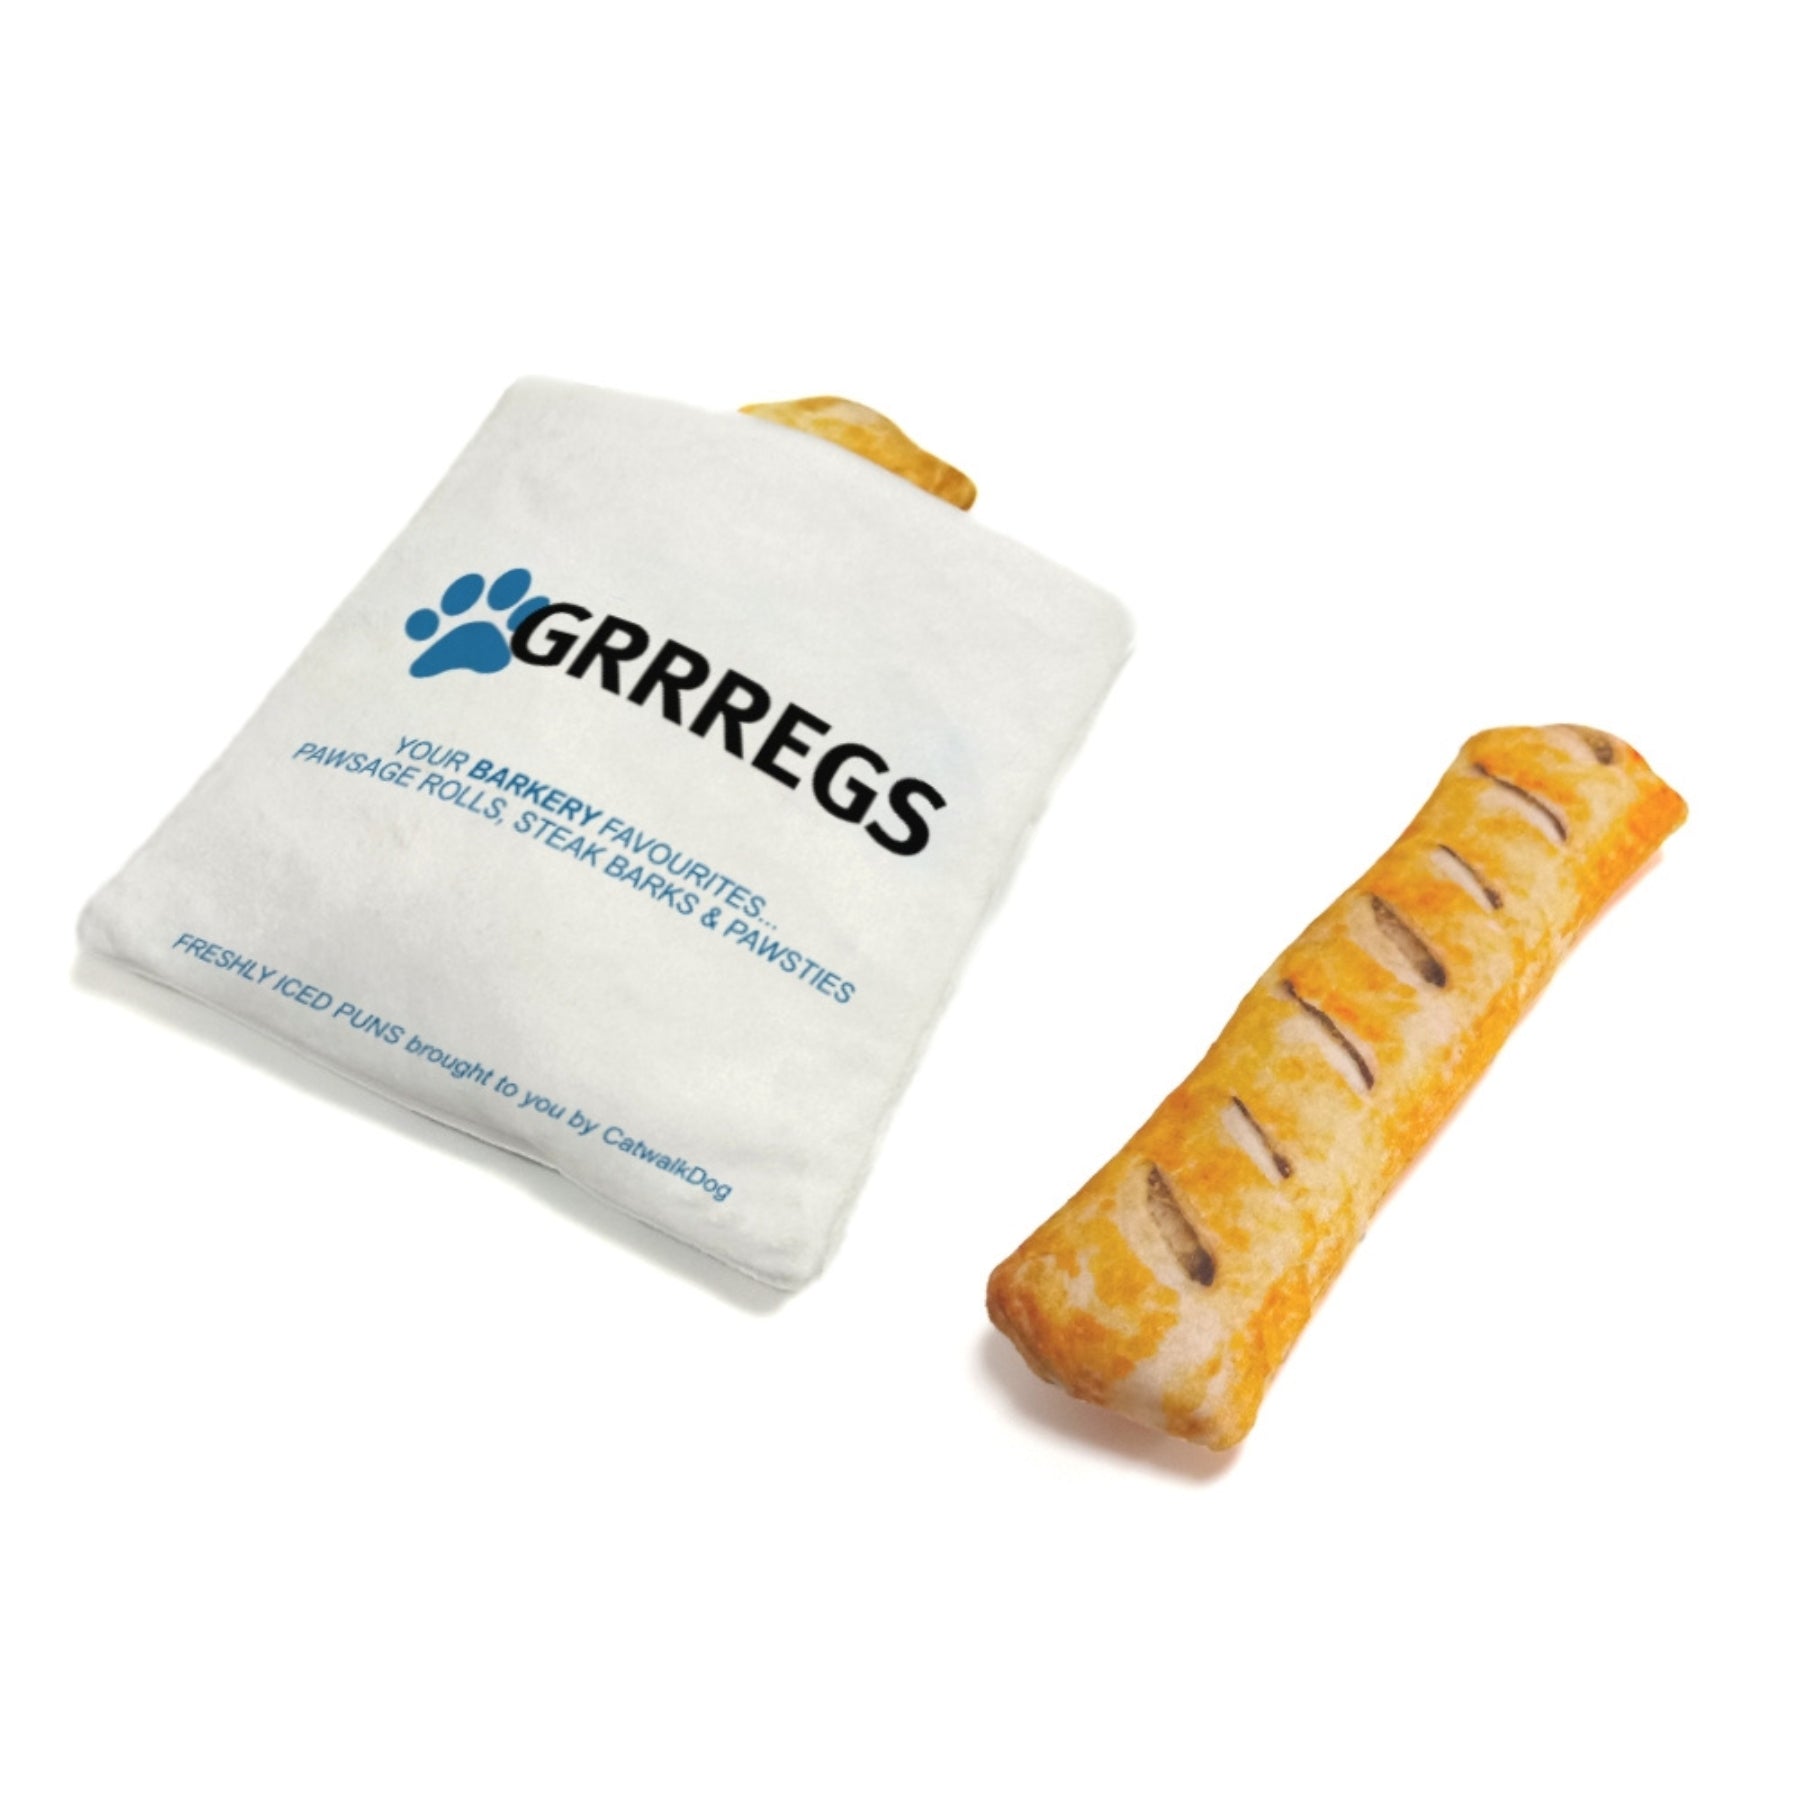 Grrregs Sausage Roll & Bag - Pooch Luxury